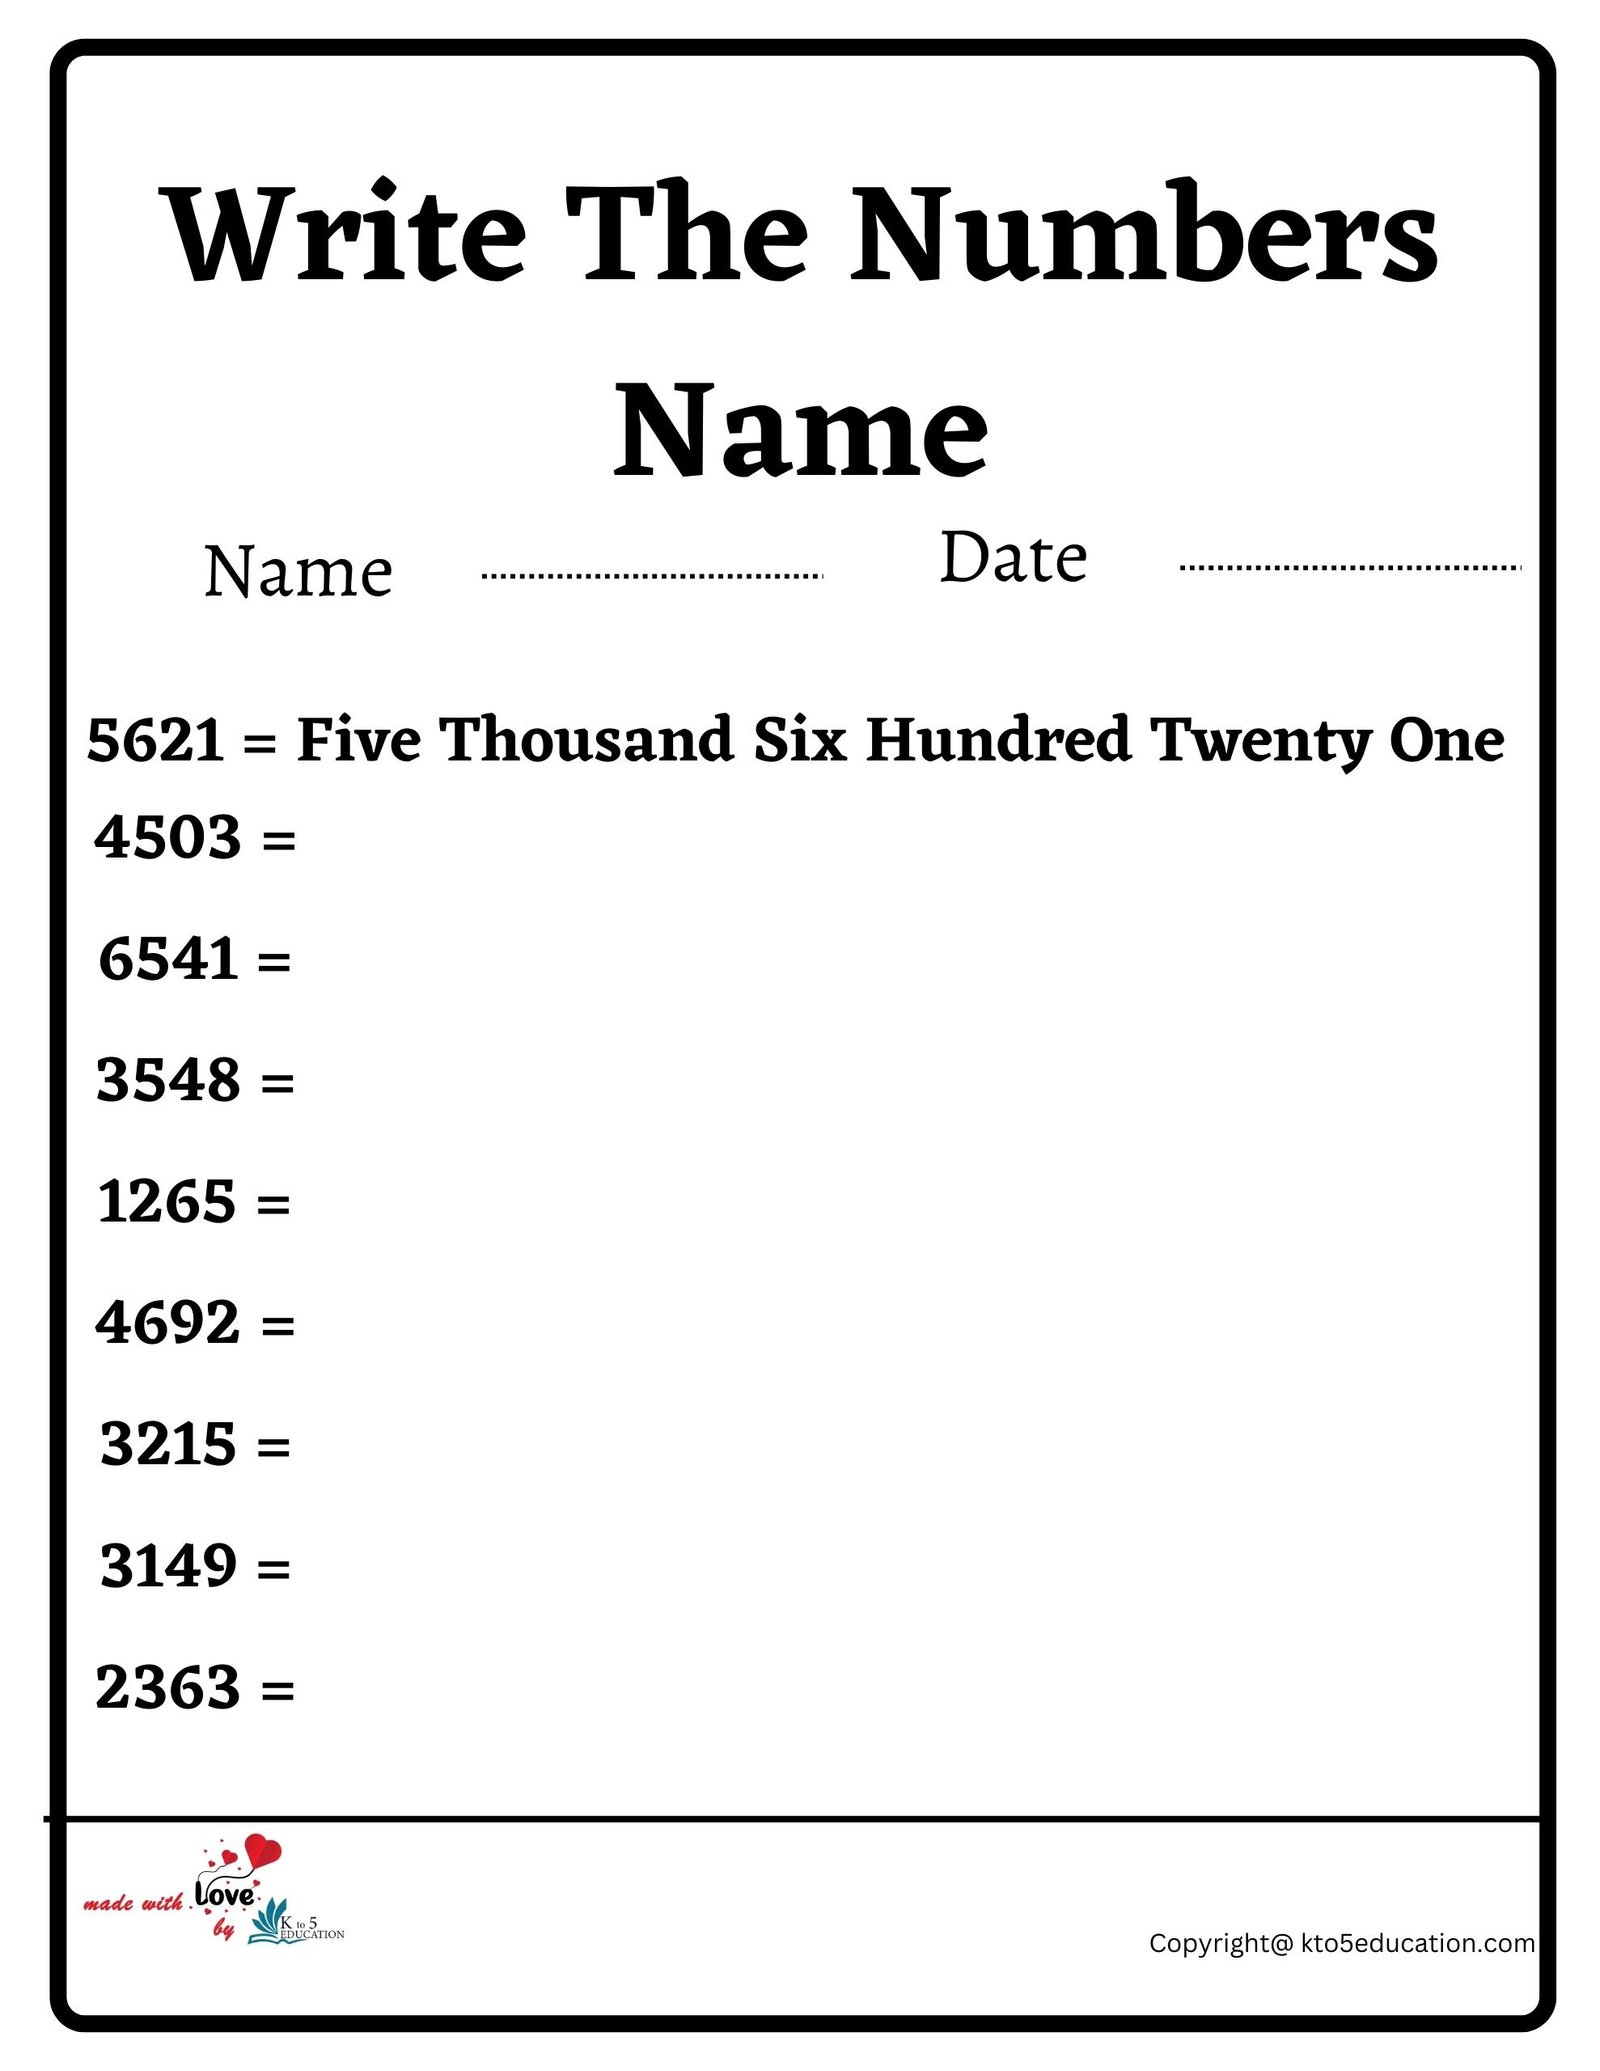 Write The Numbers Name Worksheet 2